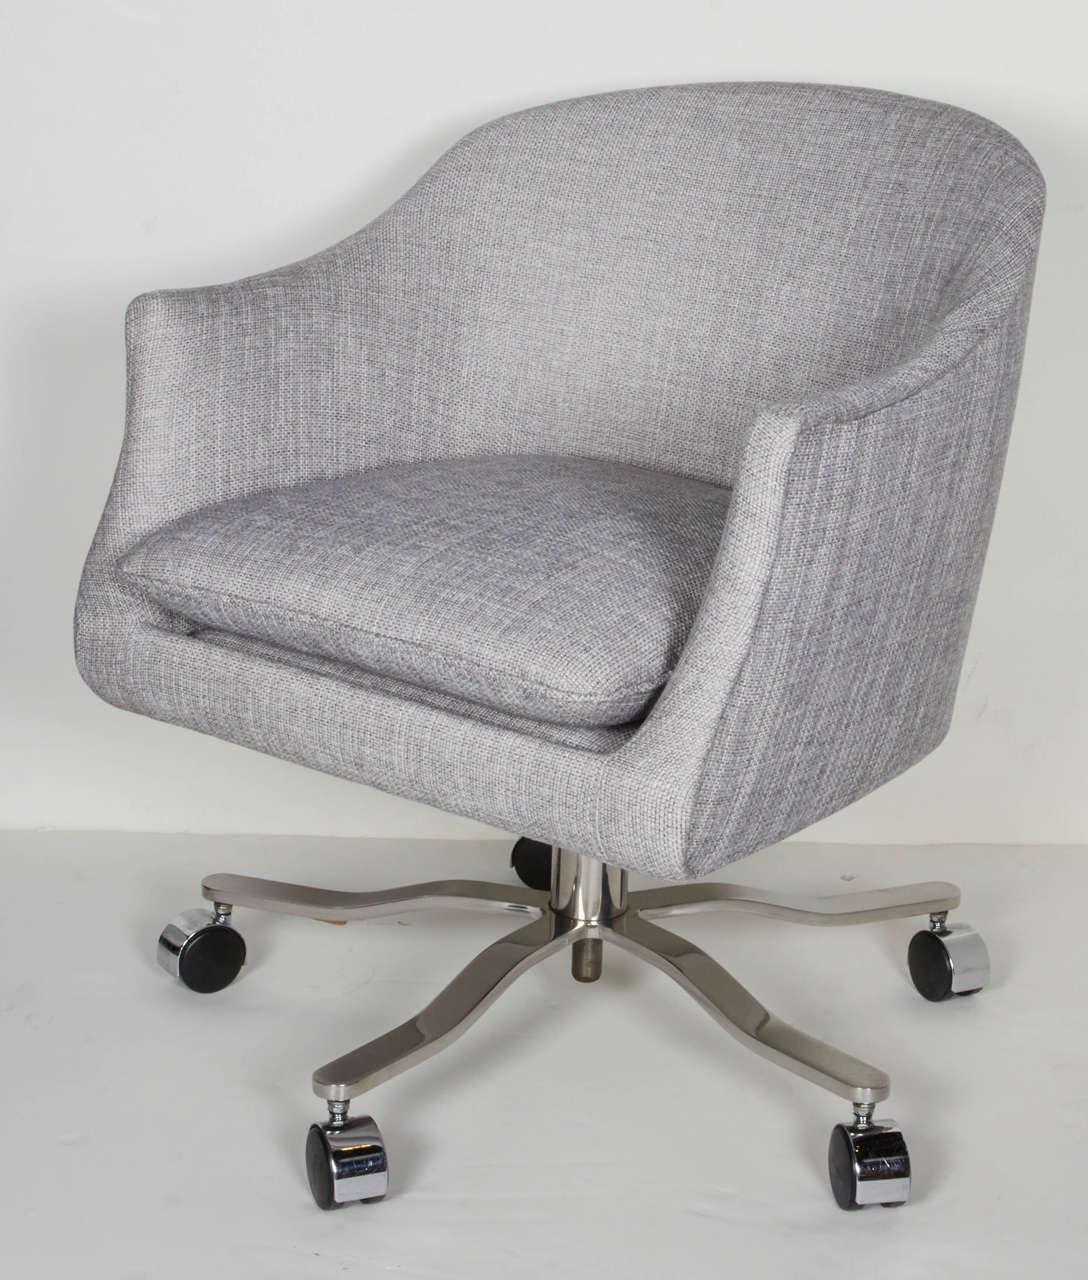 Mid-20th Century Mid-Century Modern Swivel Desk Chair Designed by Ward Bennett